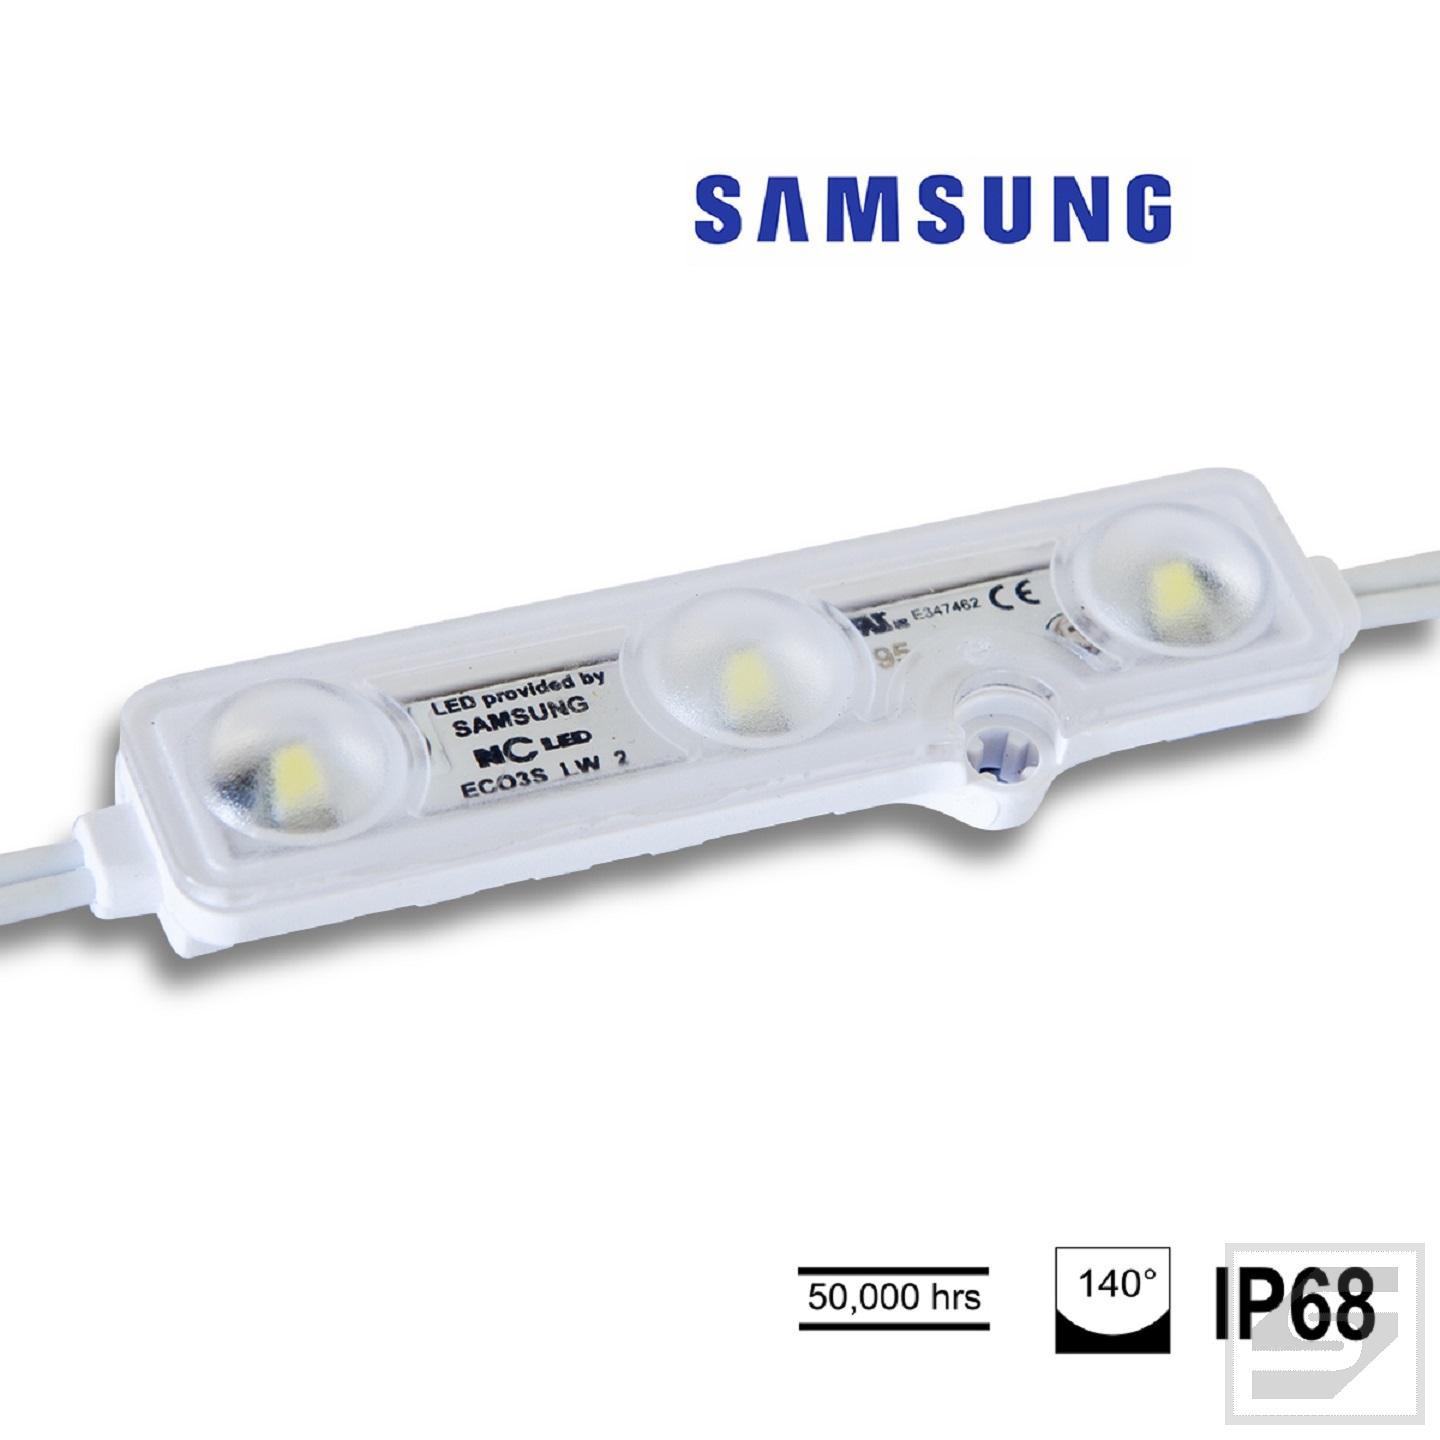 Moduł LED NC LENS SAMSUNG biały 1W 9500K;12VDC;83mA;93lm;6x15x11;IP68